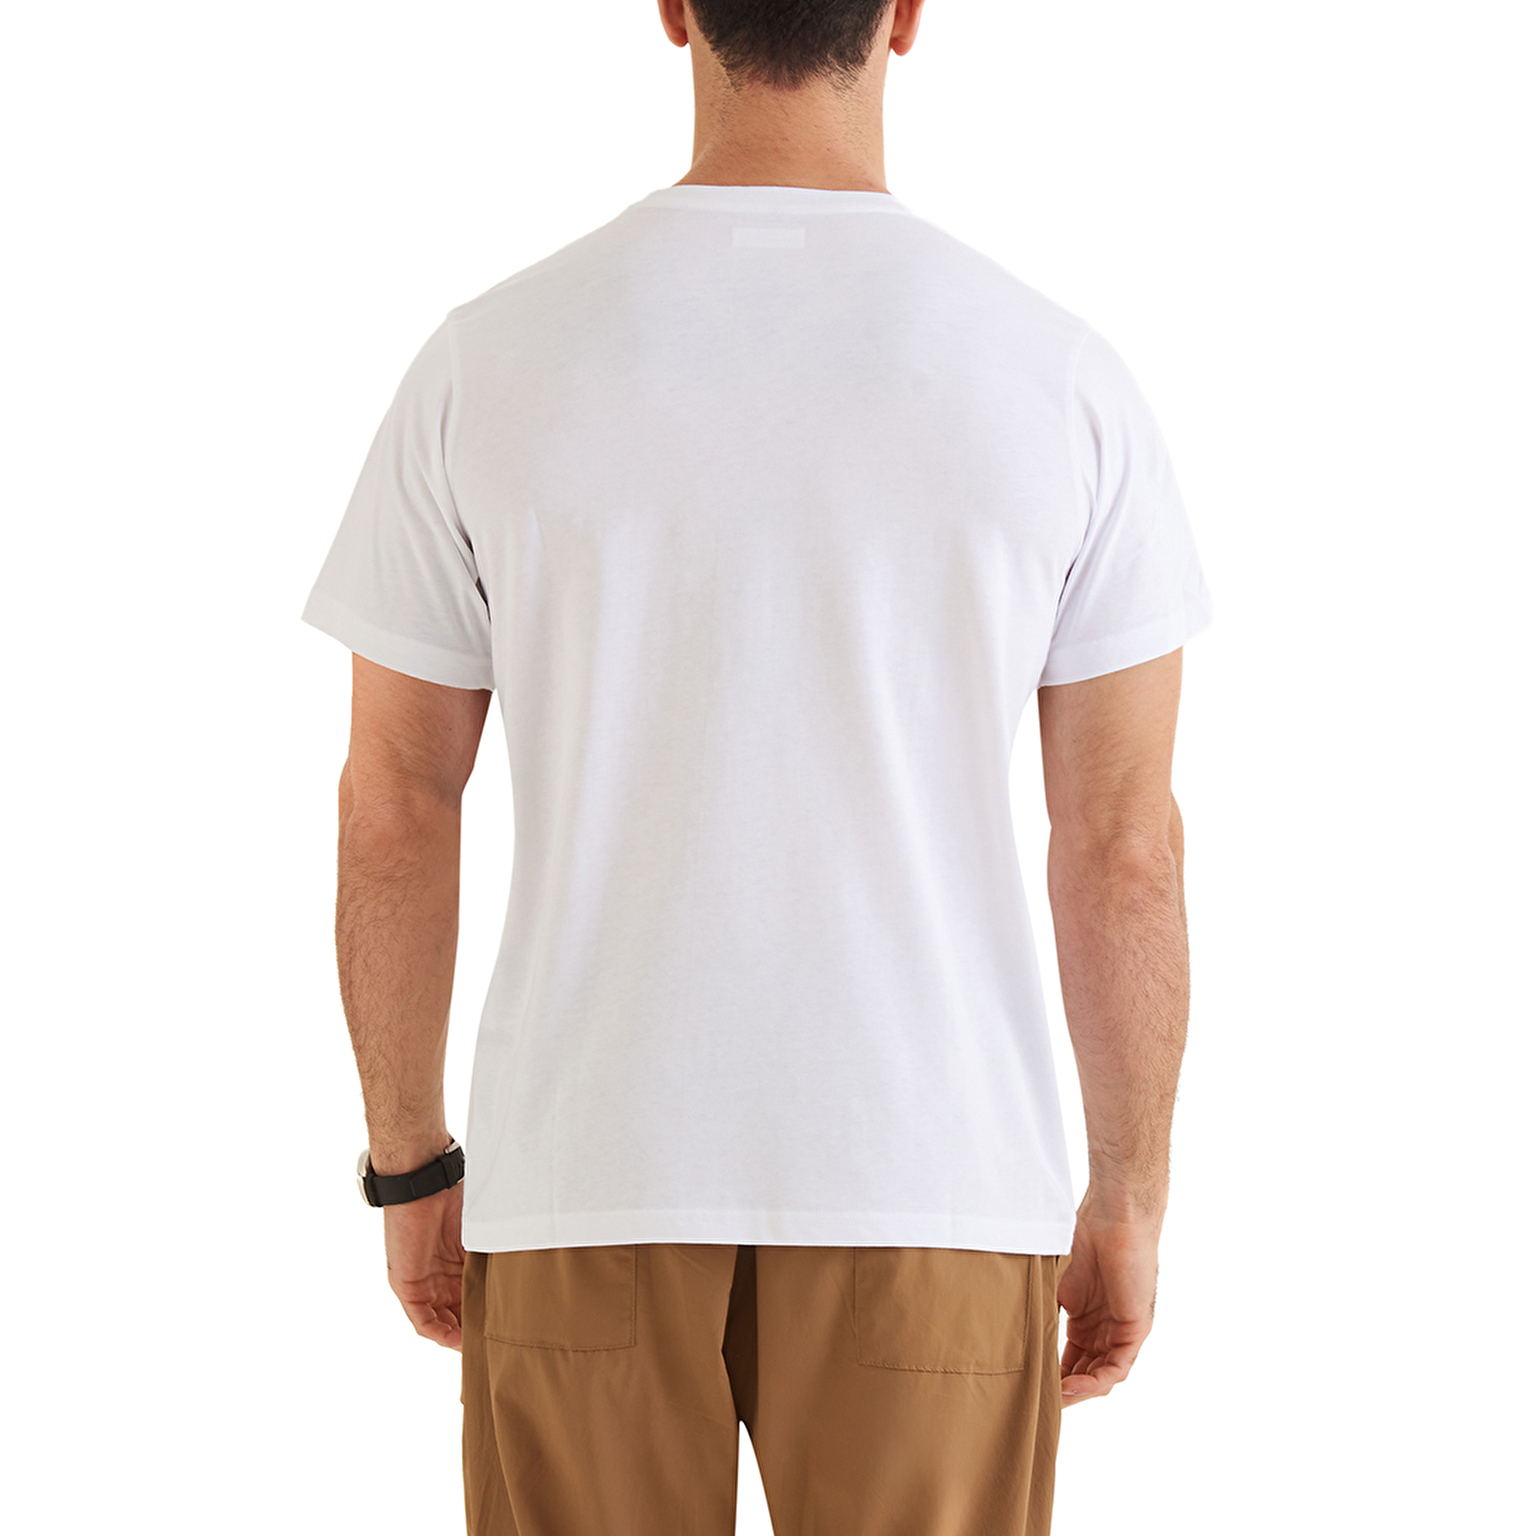 CSC Branded Badge Erkek Comfort Kısa Kollu T-shirt